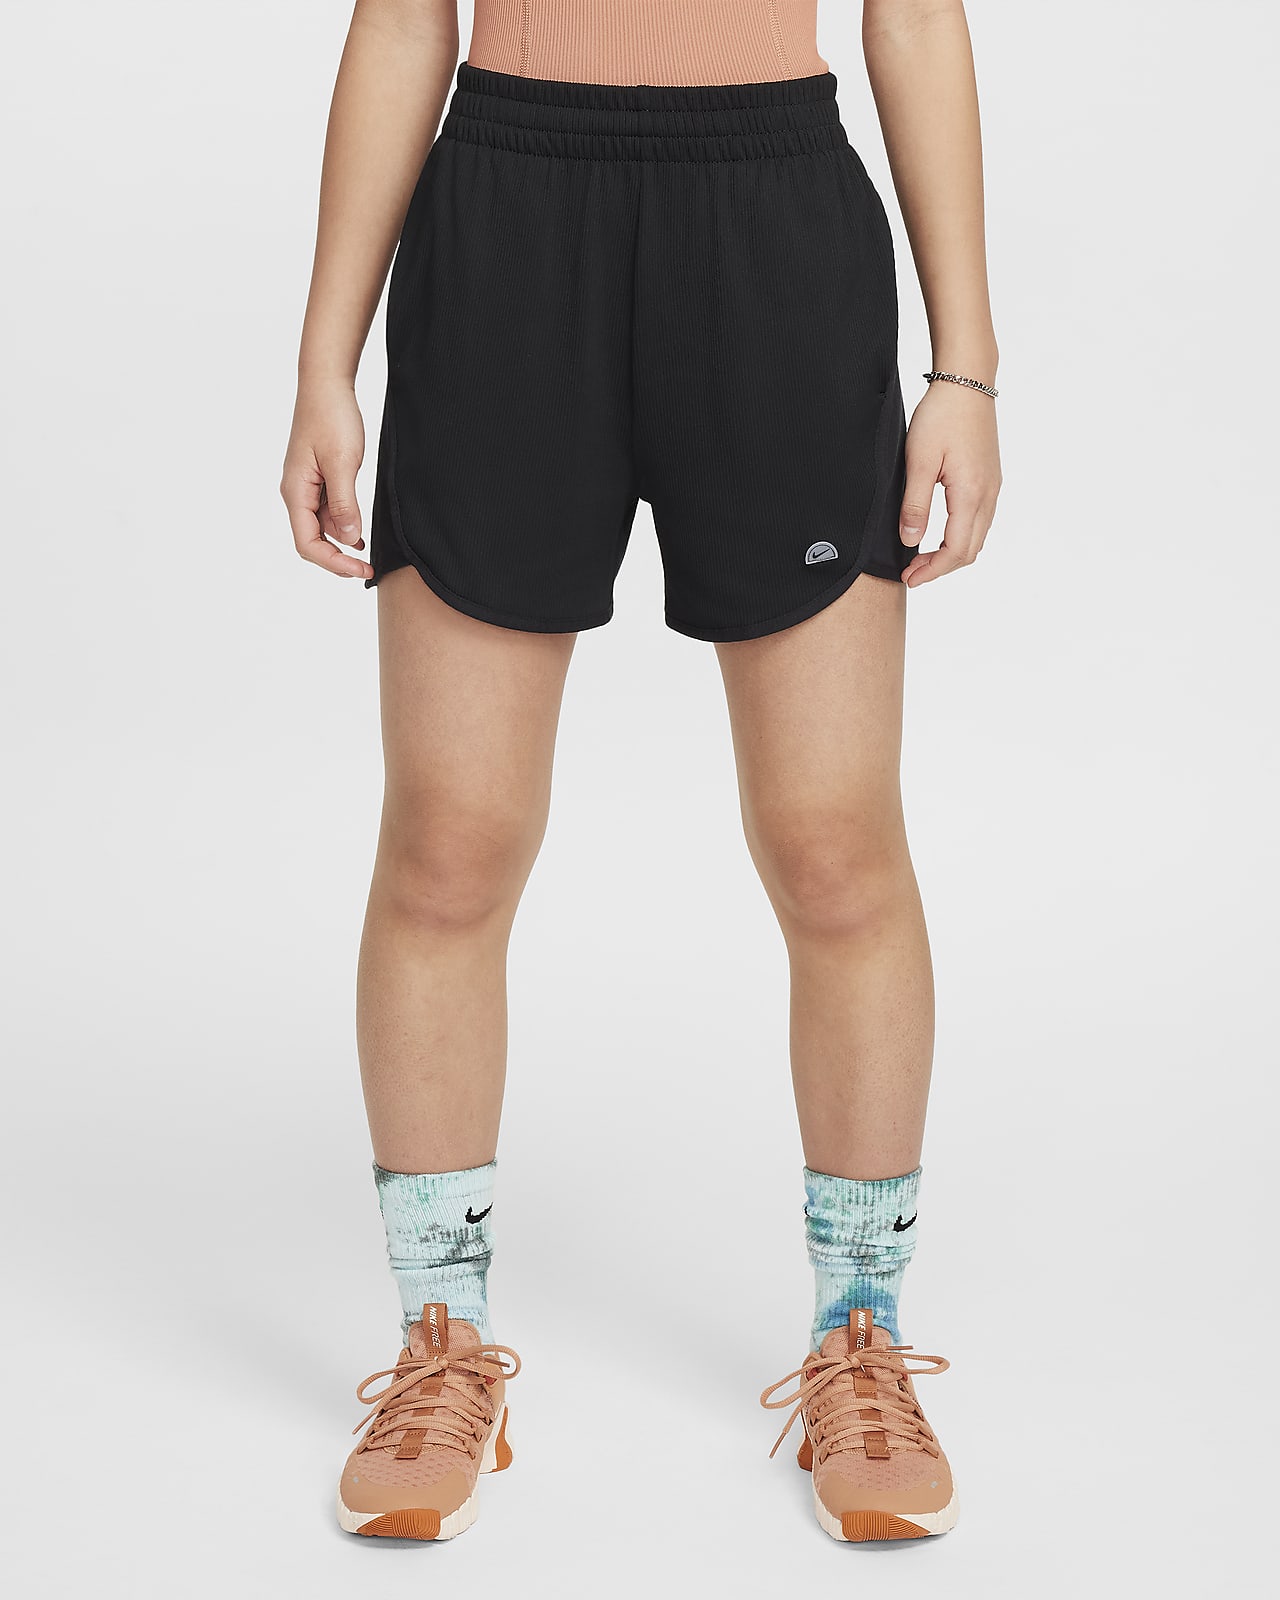 Shorts da training Dri-FIT Nike Breezy – Bambina/Ragazza